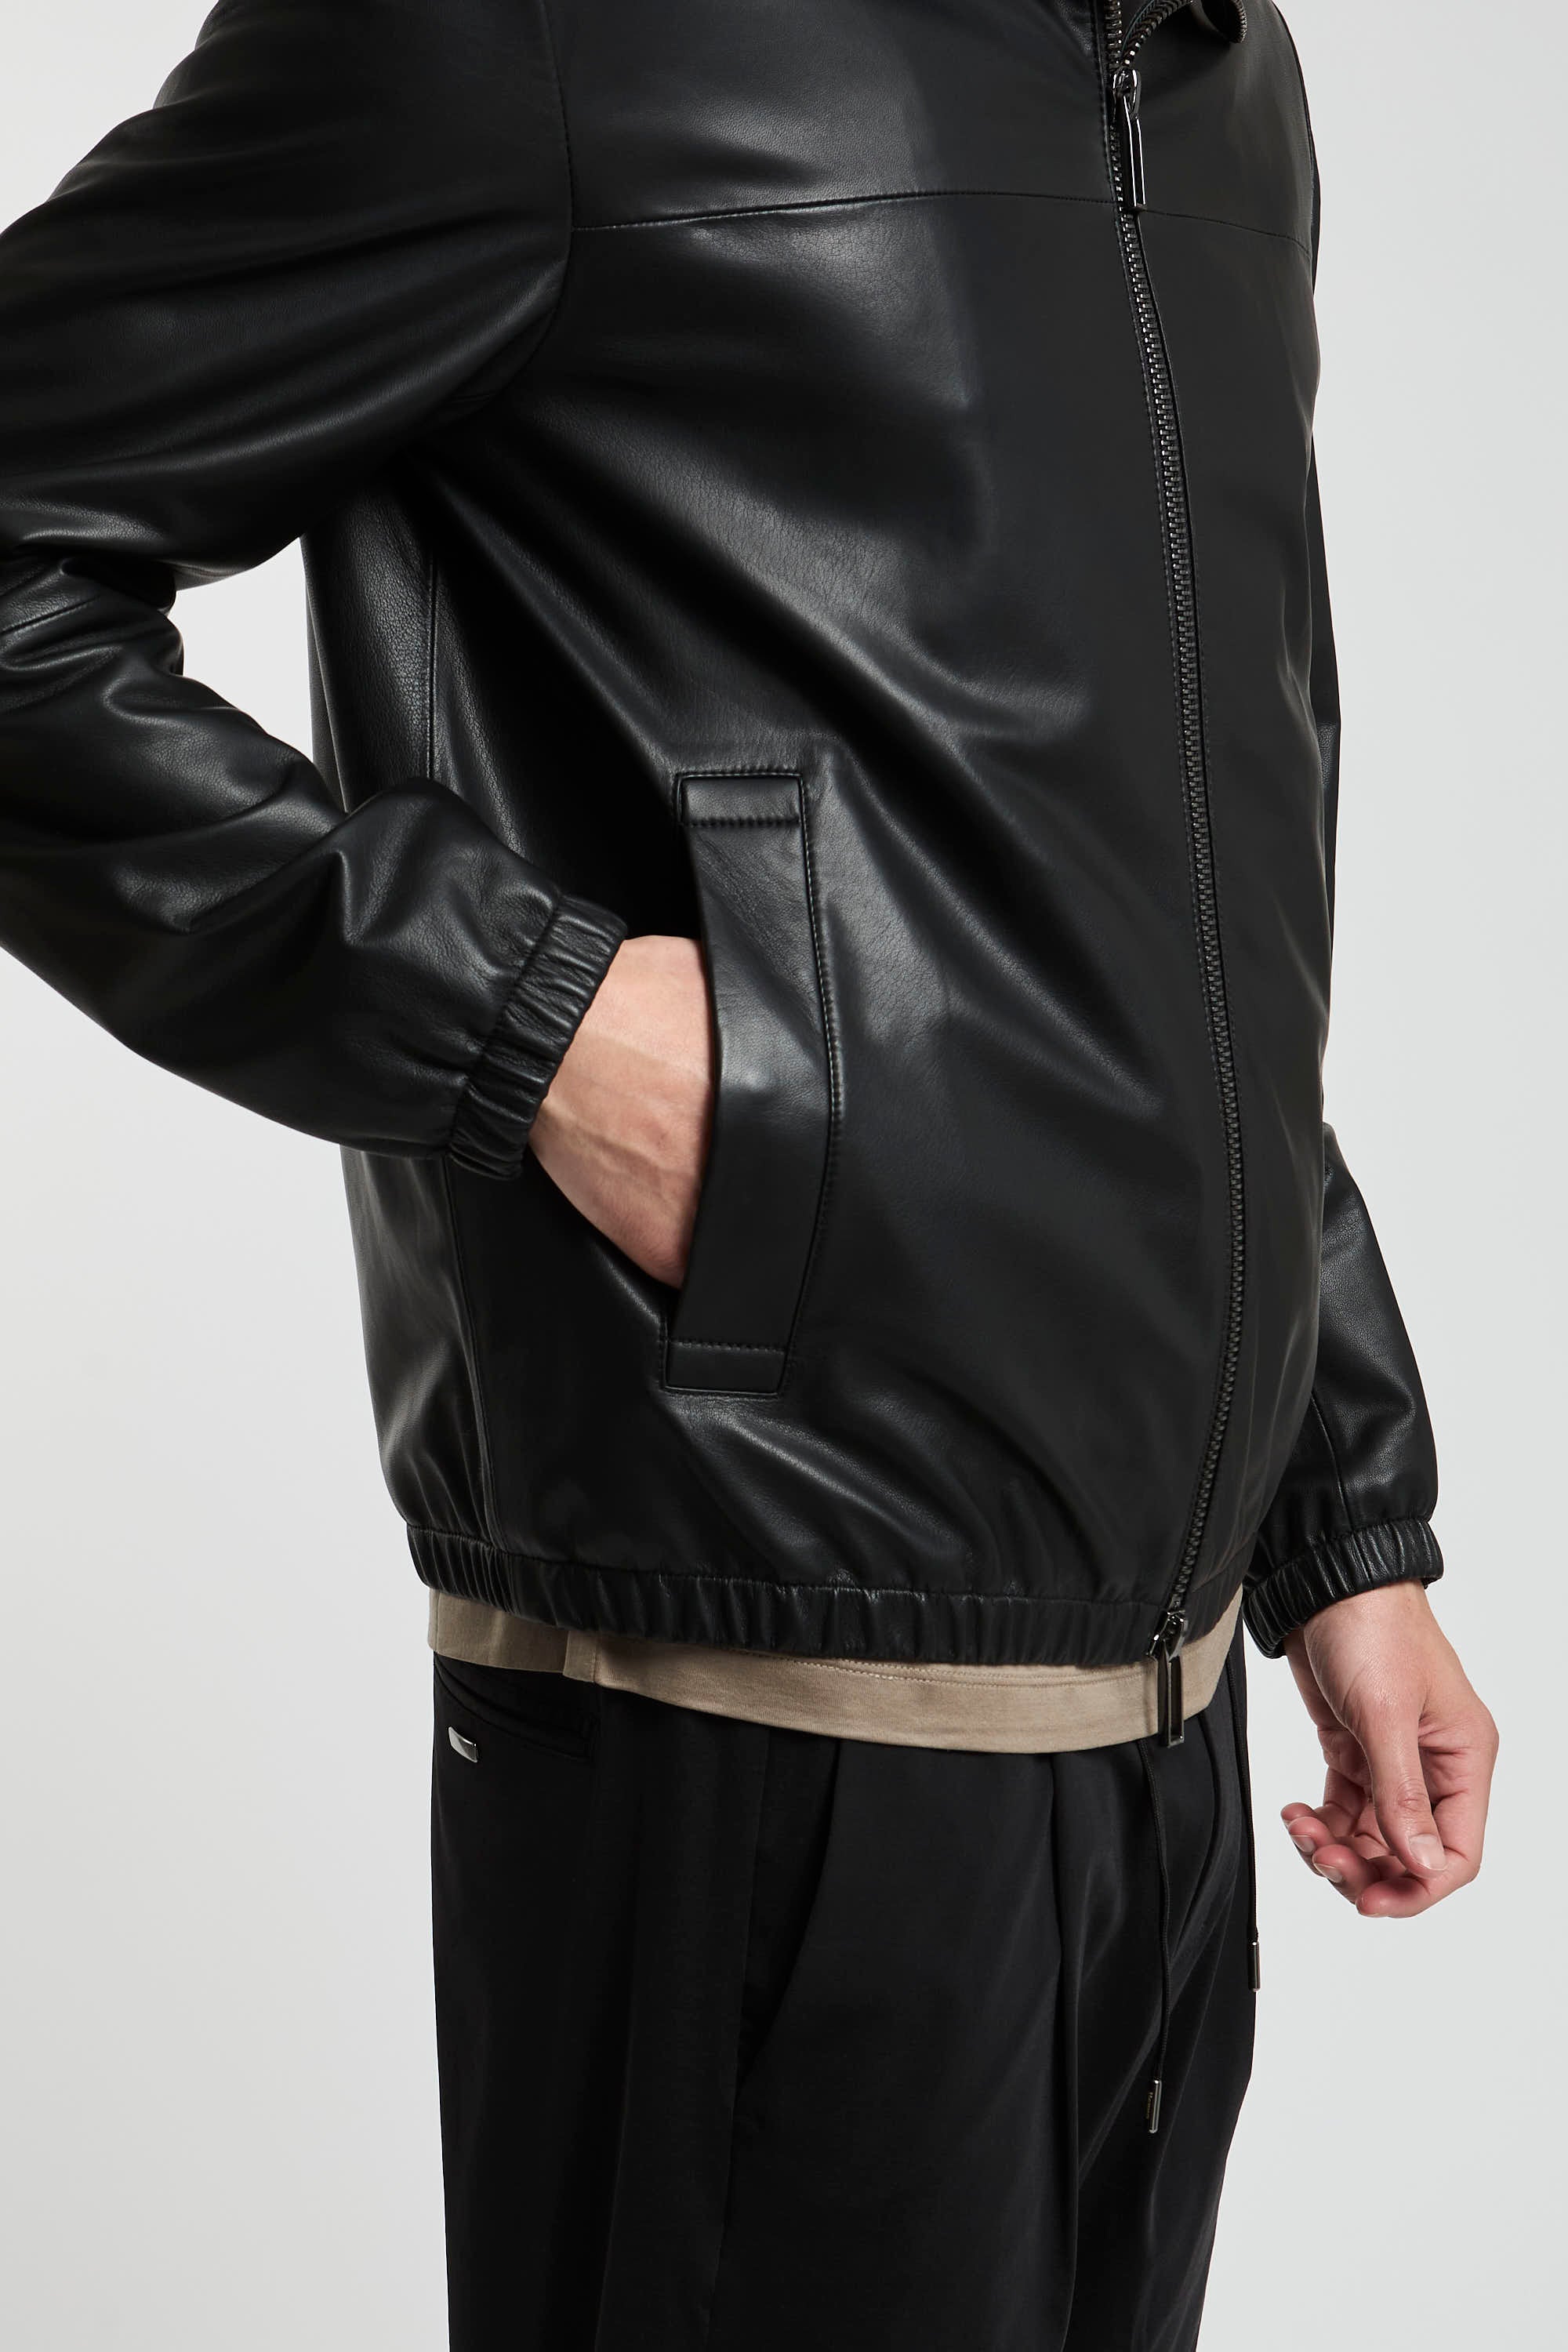 Emporio Armani Black Leather Jacket-5